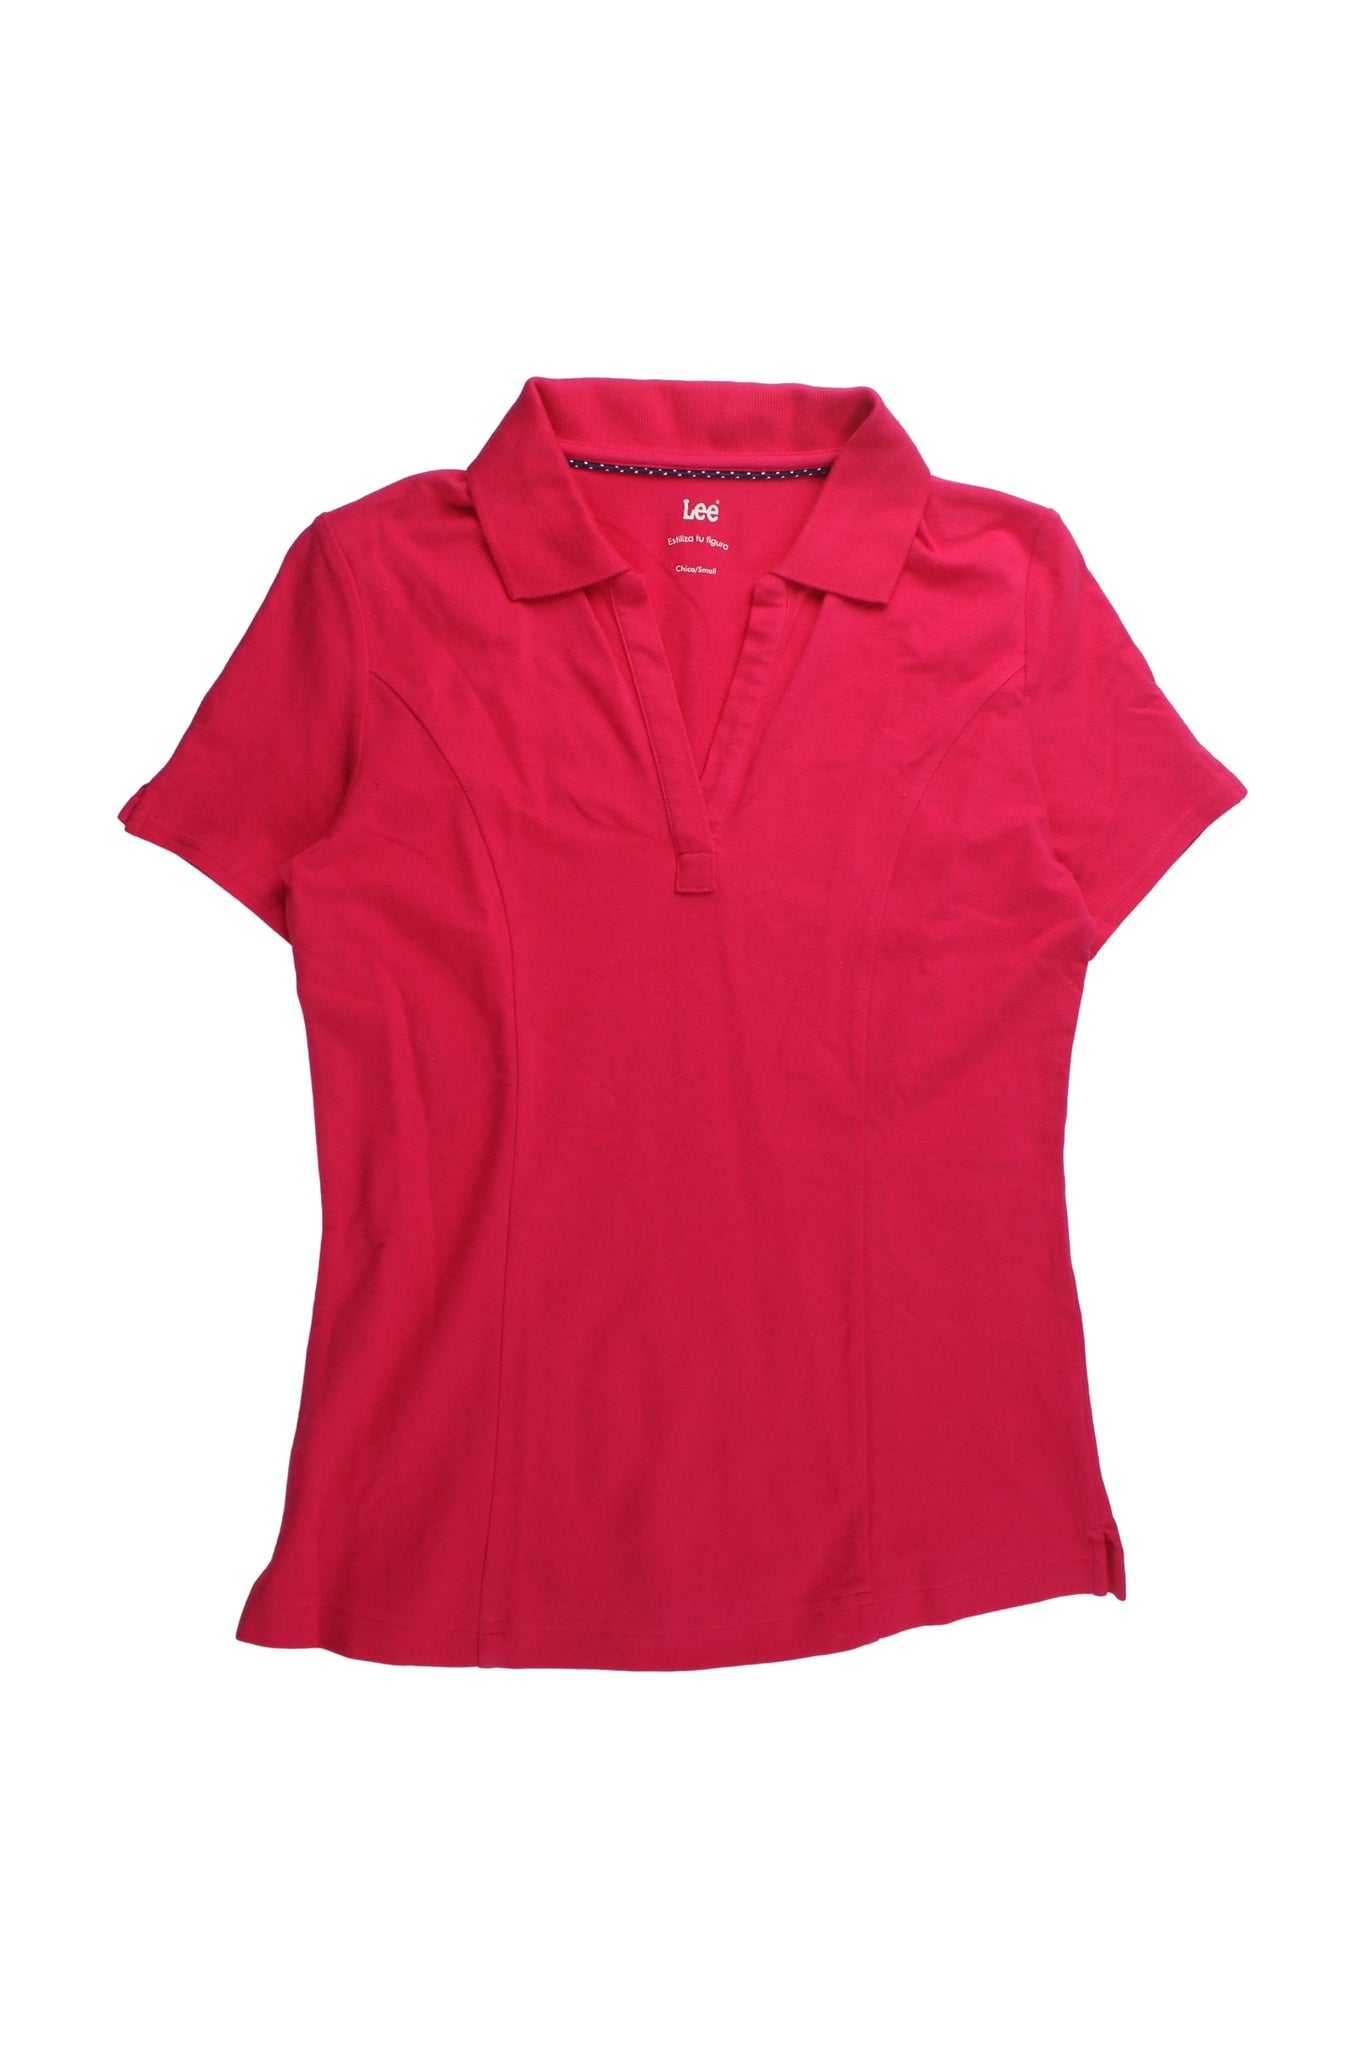 LEE WOMAN - Polo Blusa Color Rosa